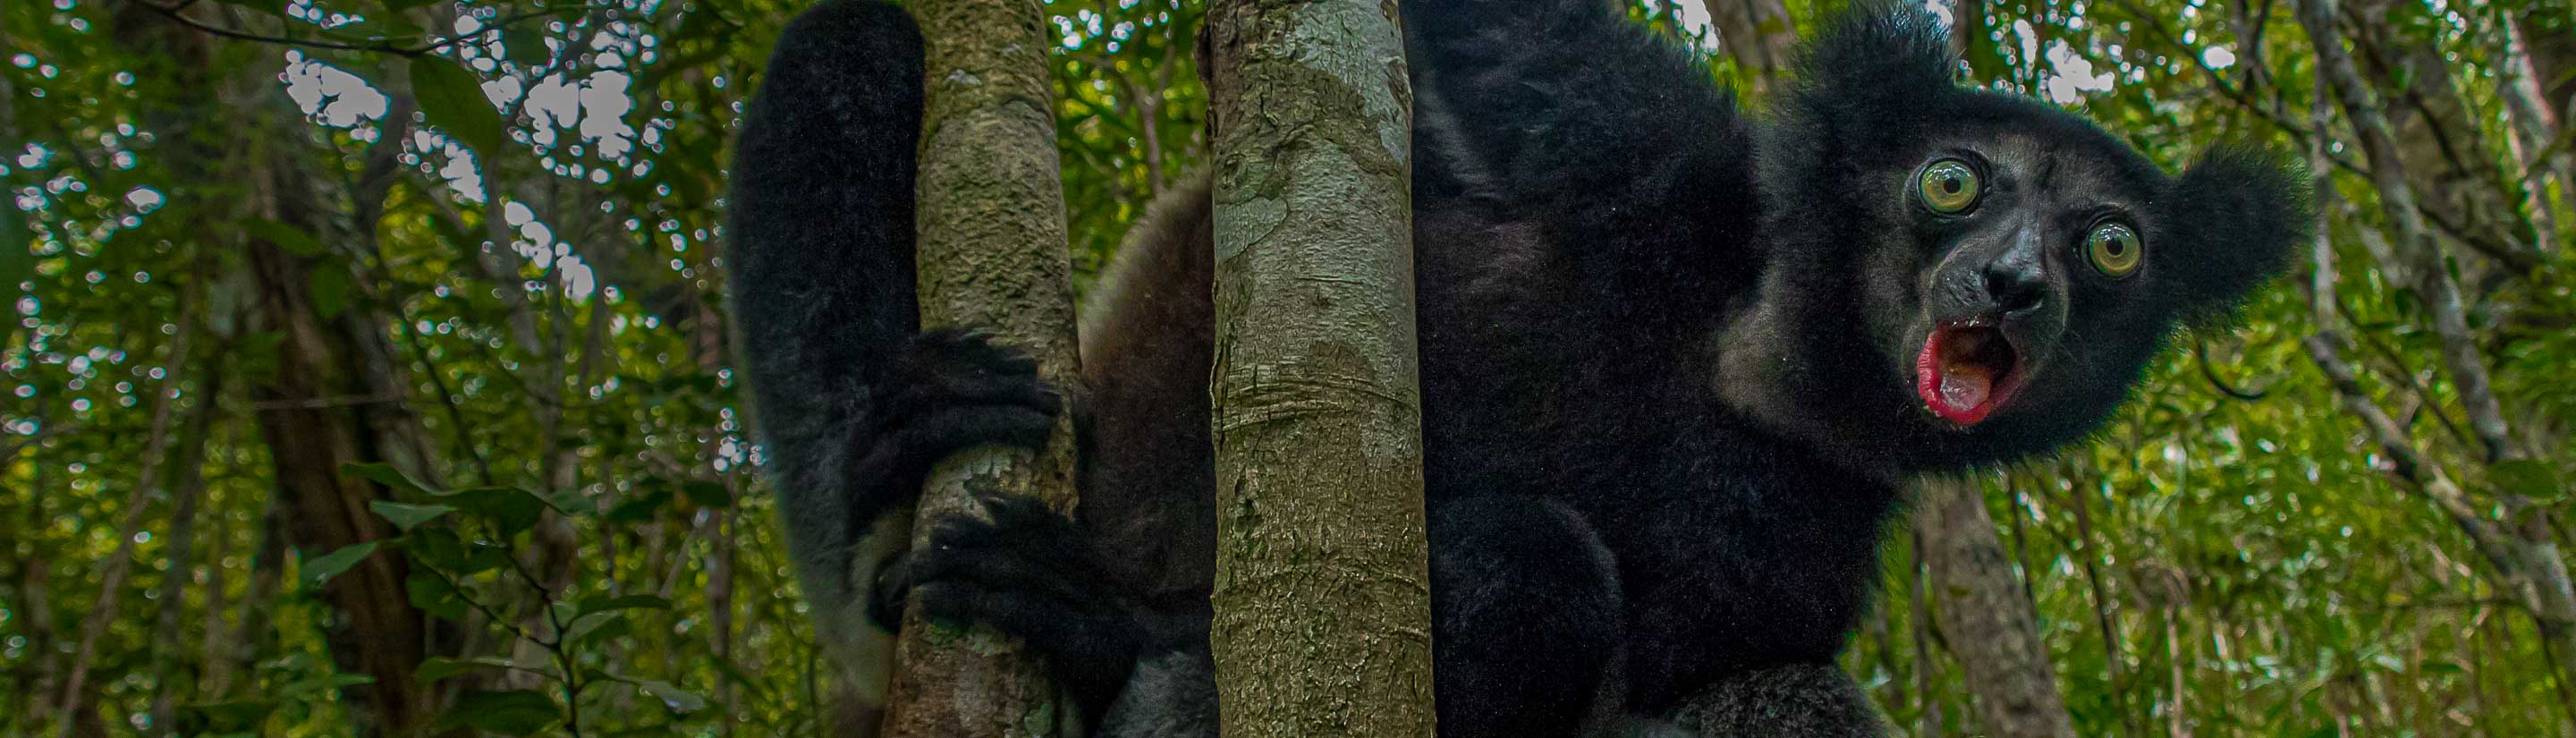 Schwarzer lemur auf Baum Madagaskar